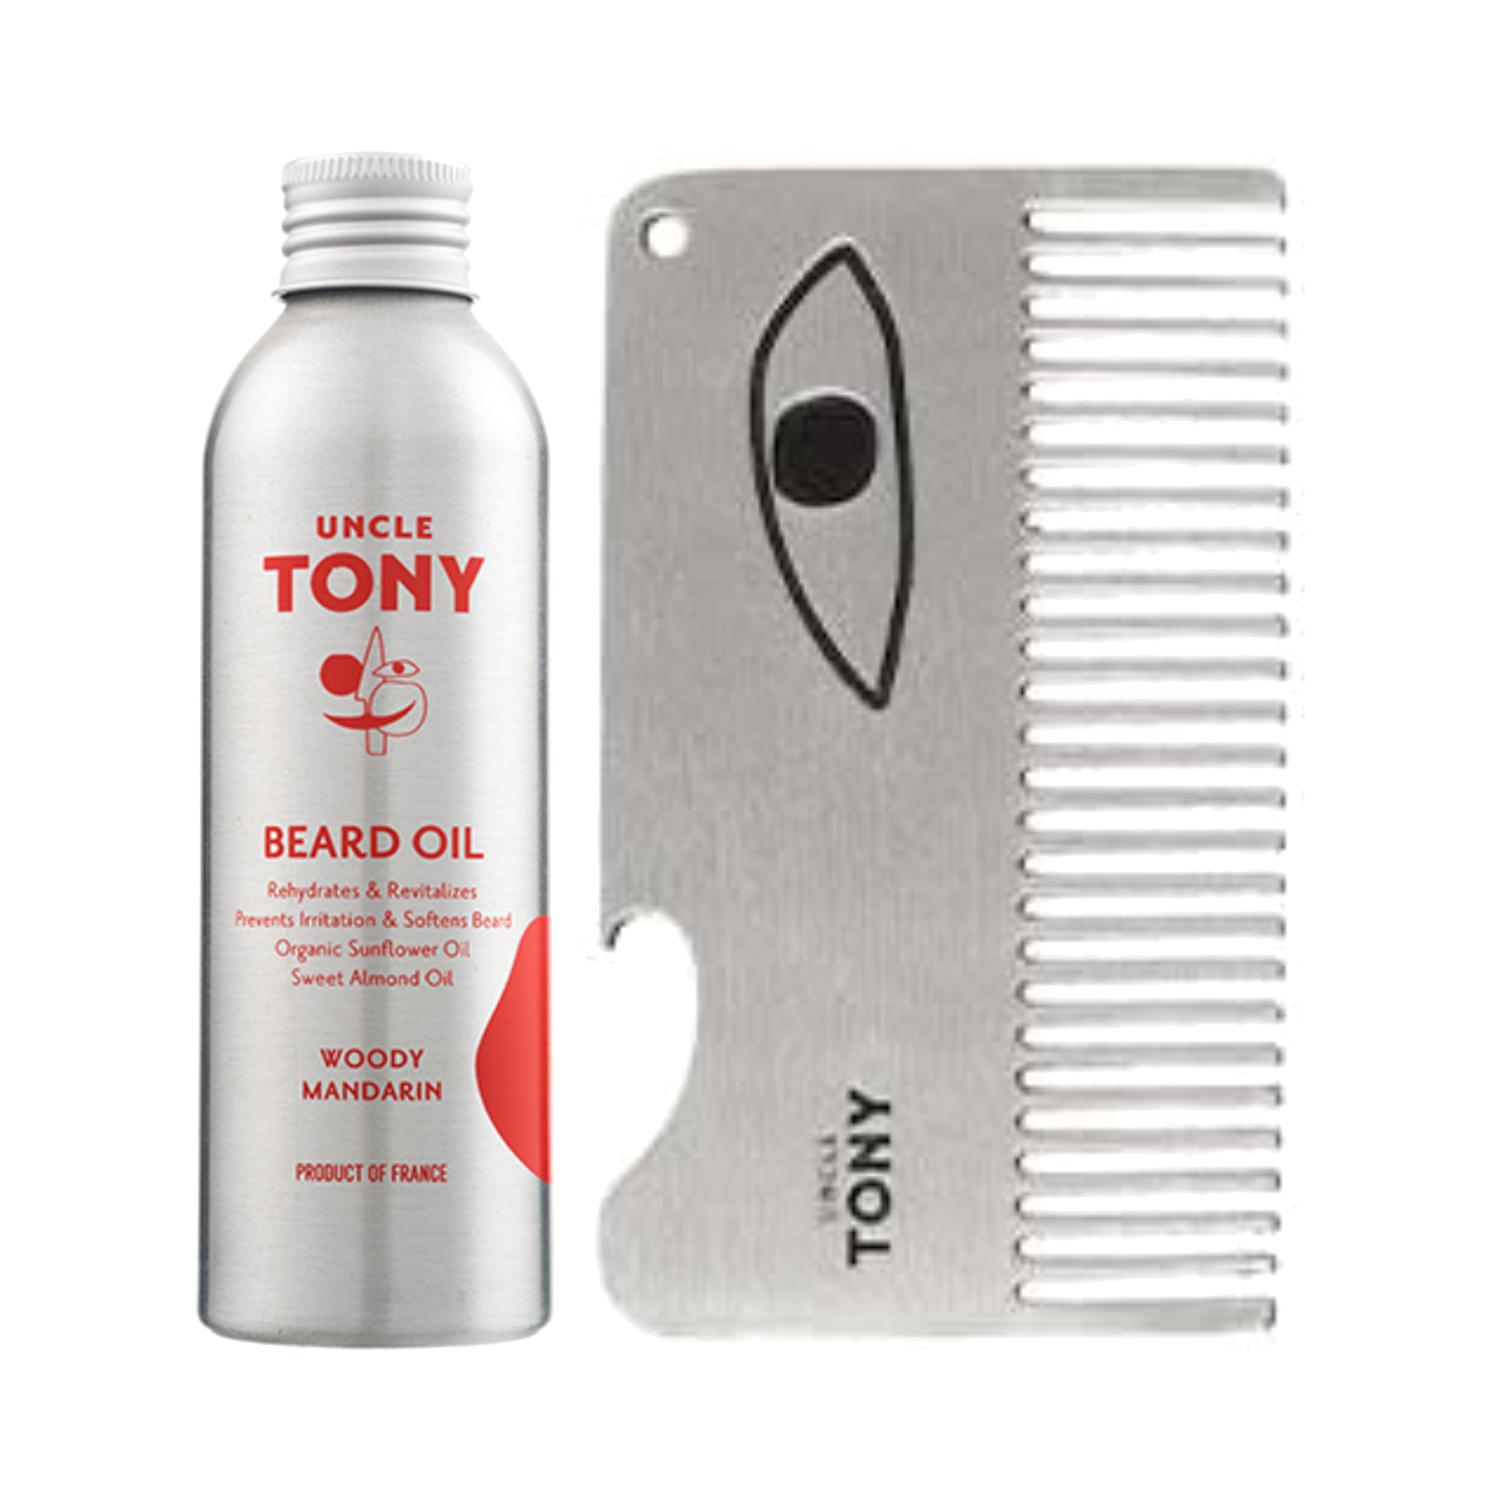 Uncle Tony | Uncle Tony Combo Beard Oil Organic Sunflower Oil Sweet Almond Oil Woody Mandarin & Beard Comb